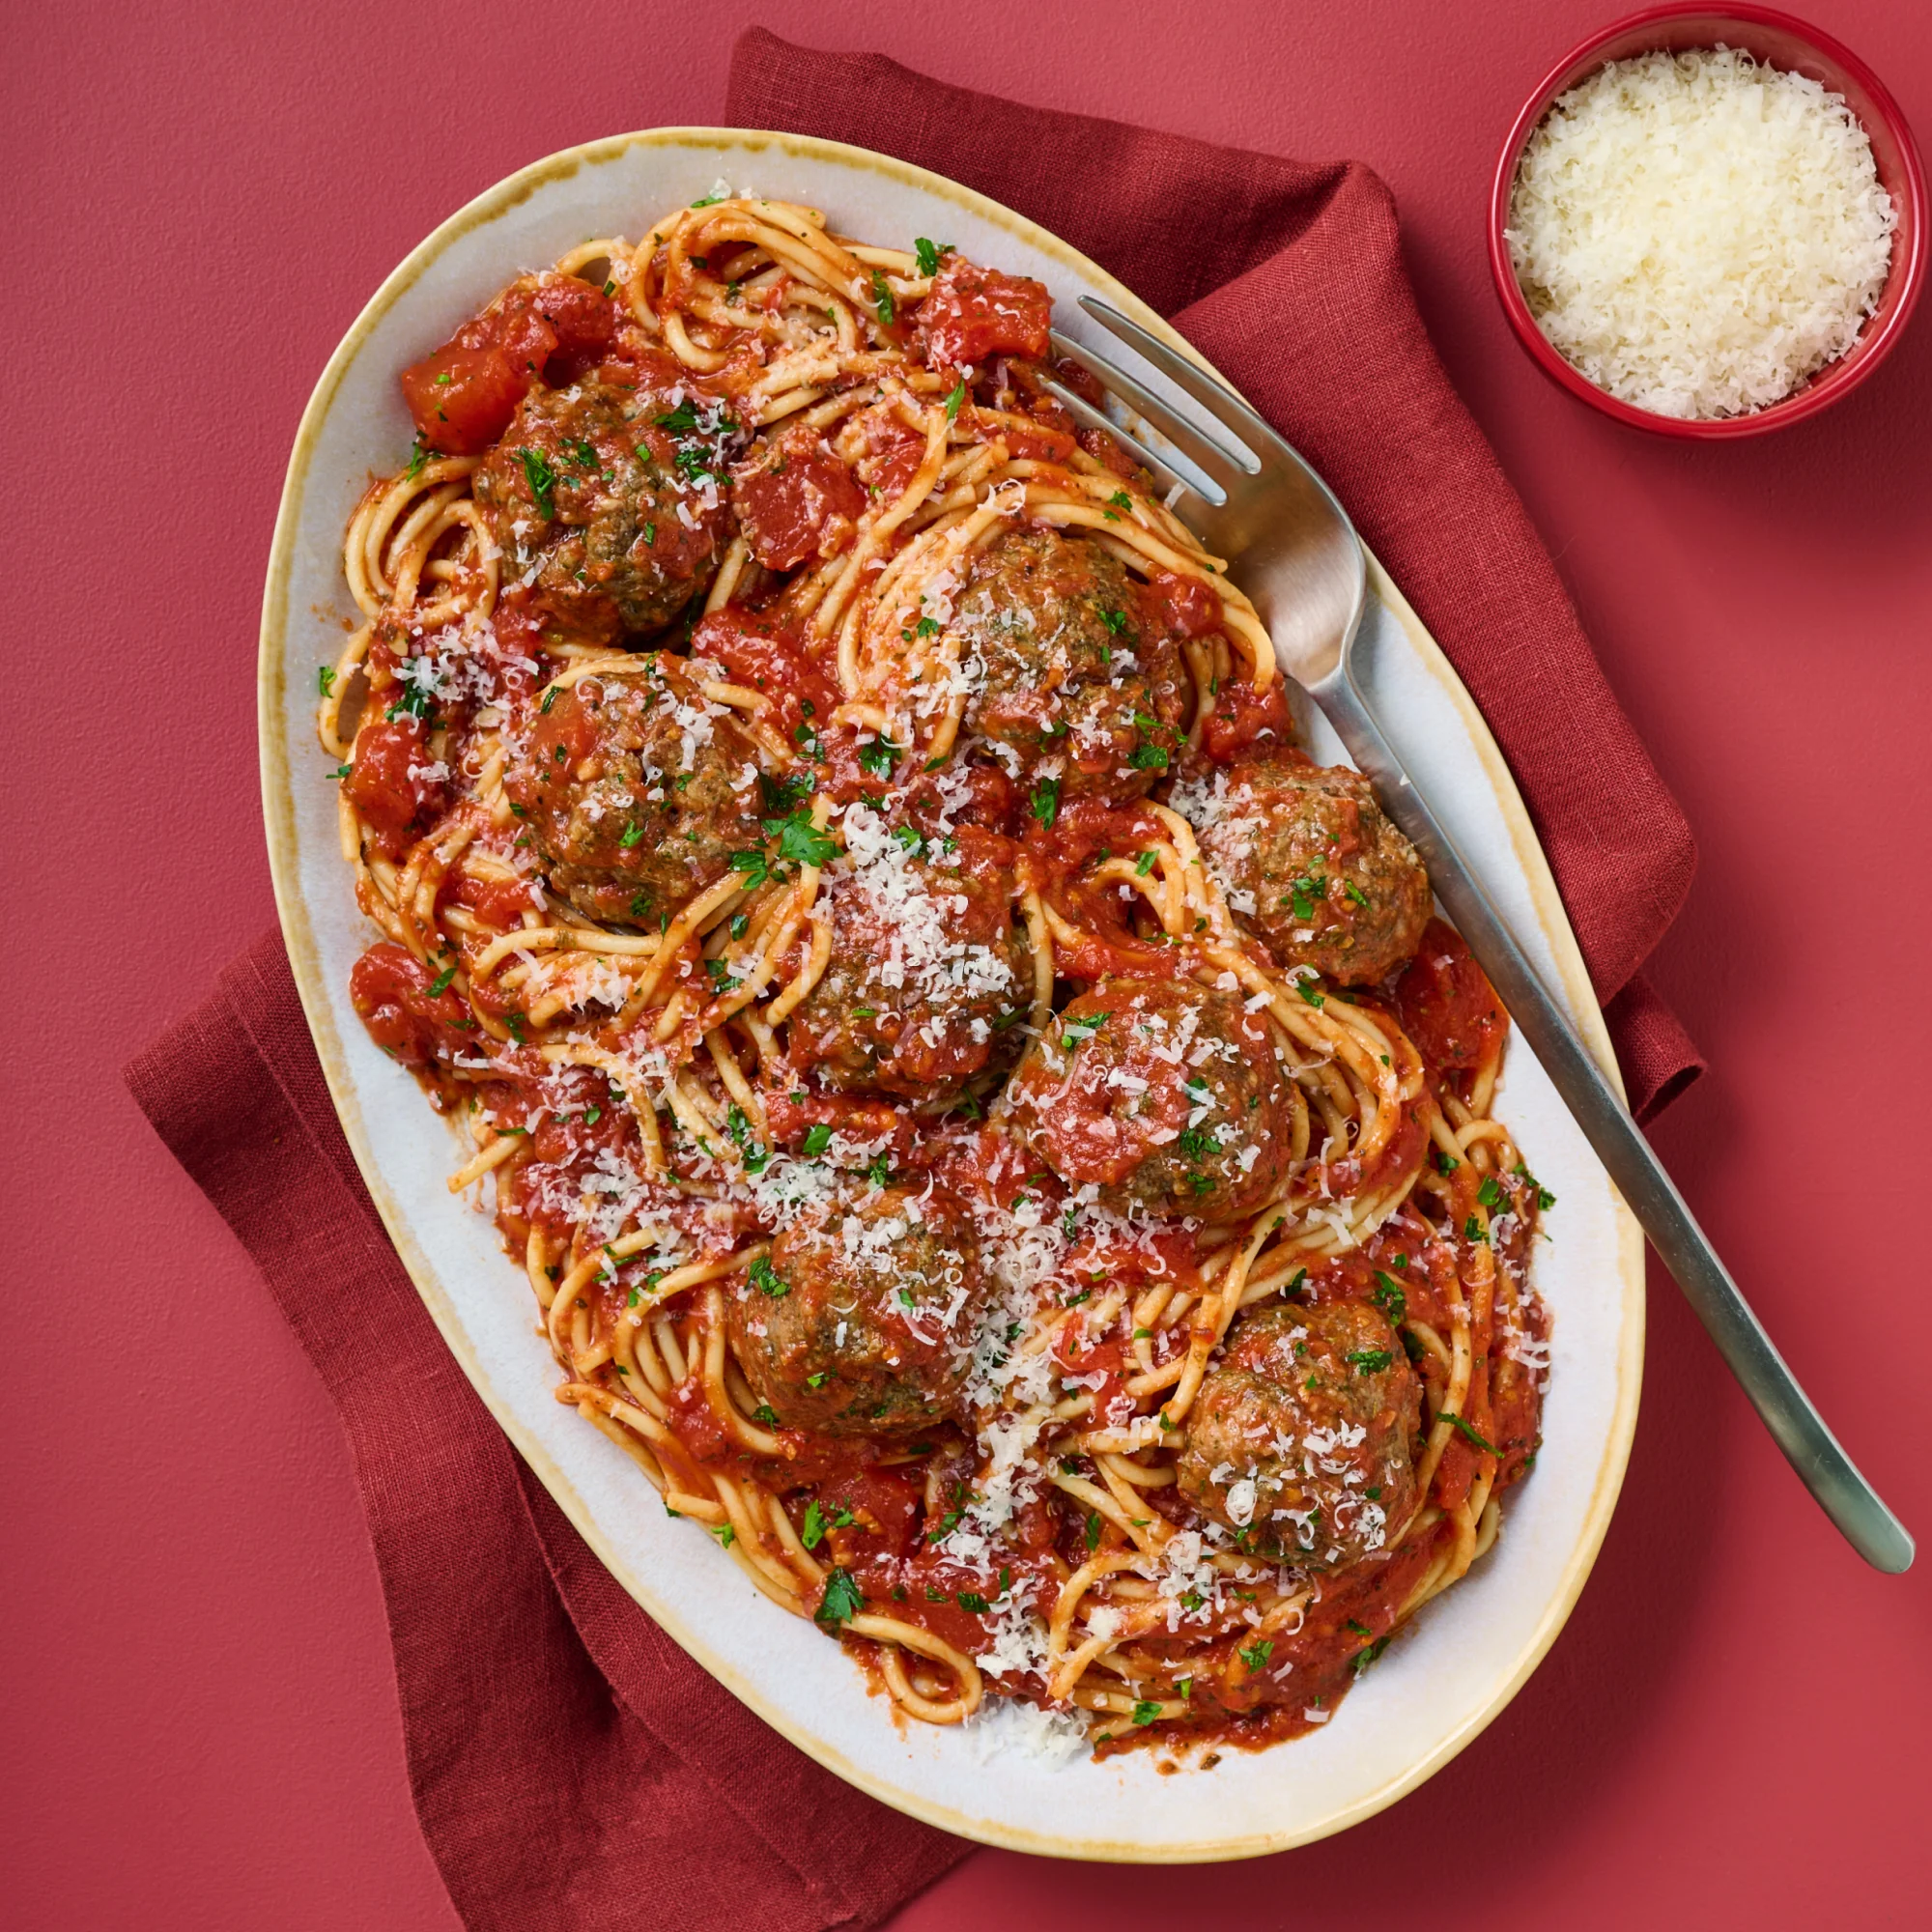 Italian Meatball Seasoning (Pack of 3) 